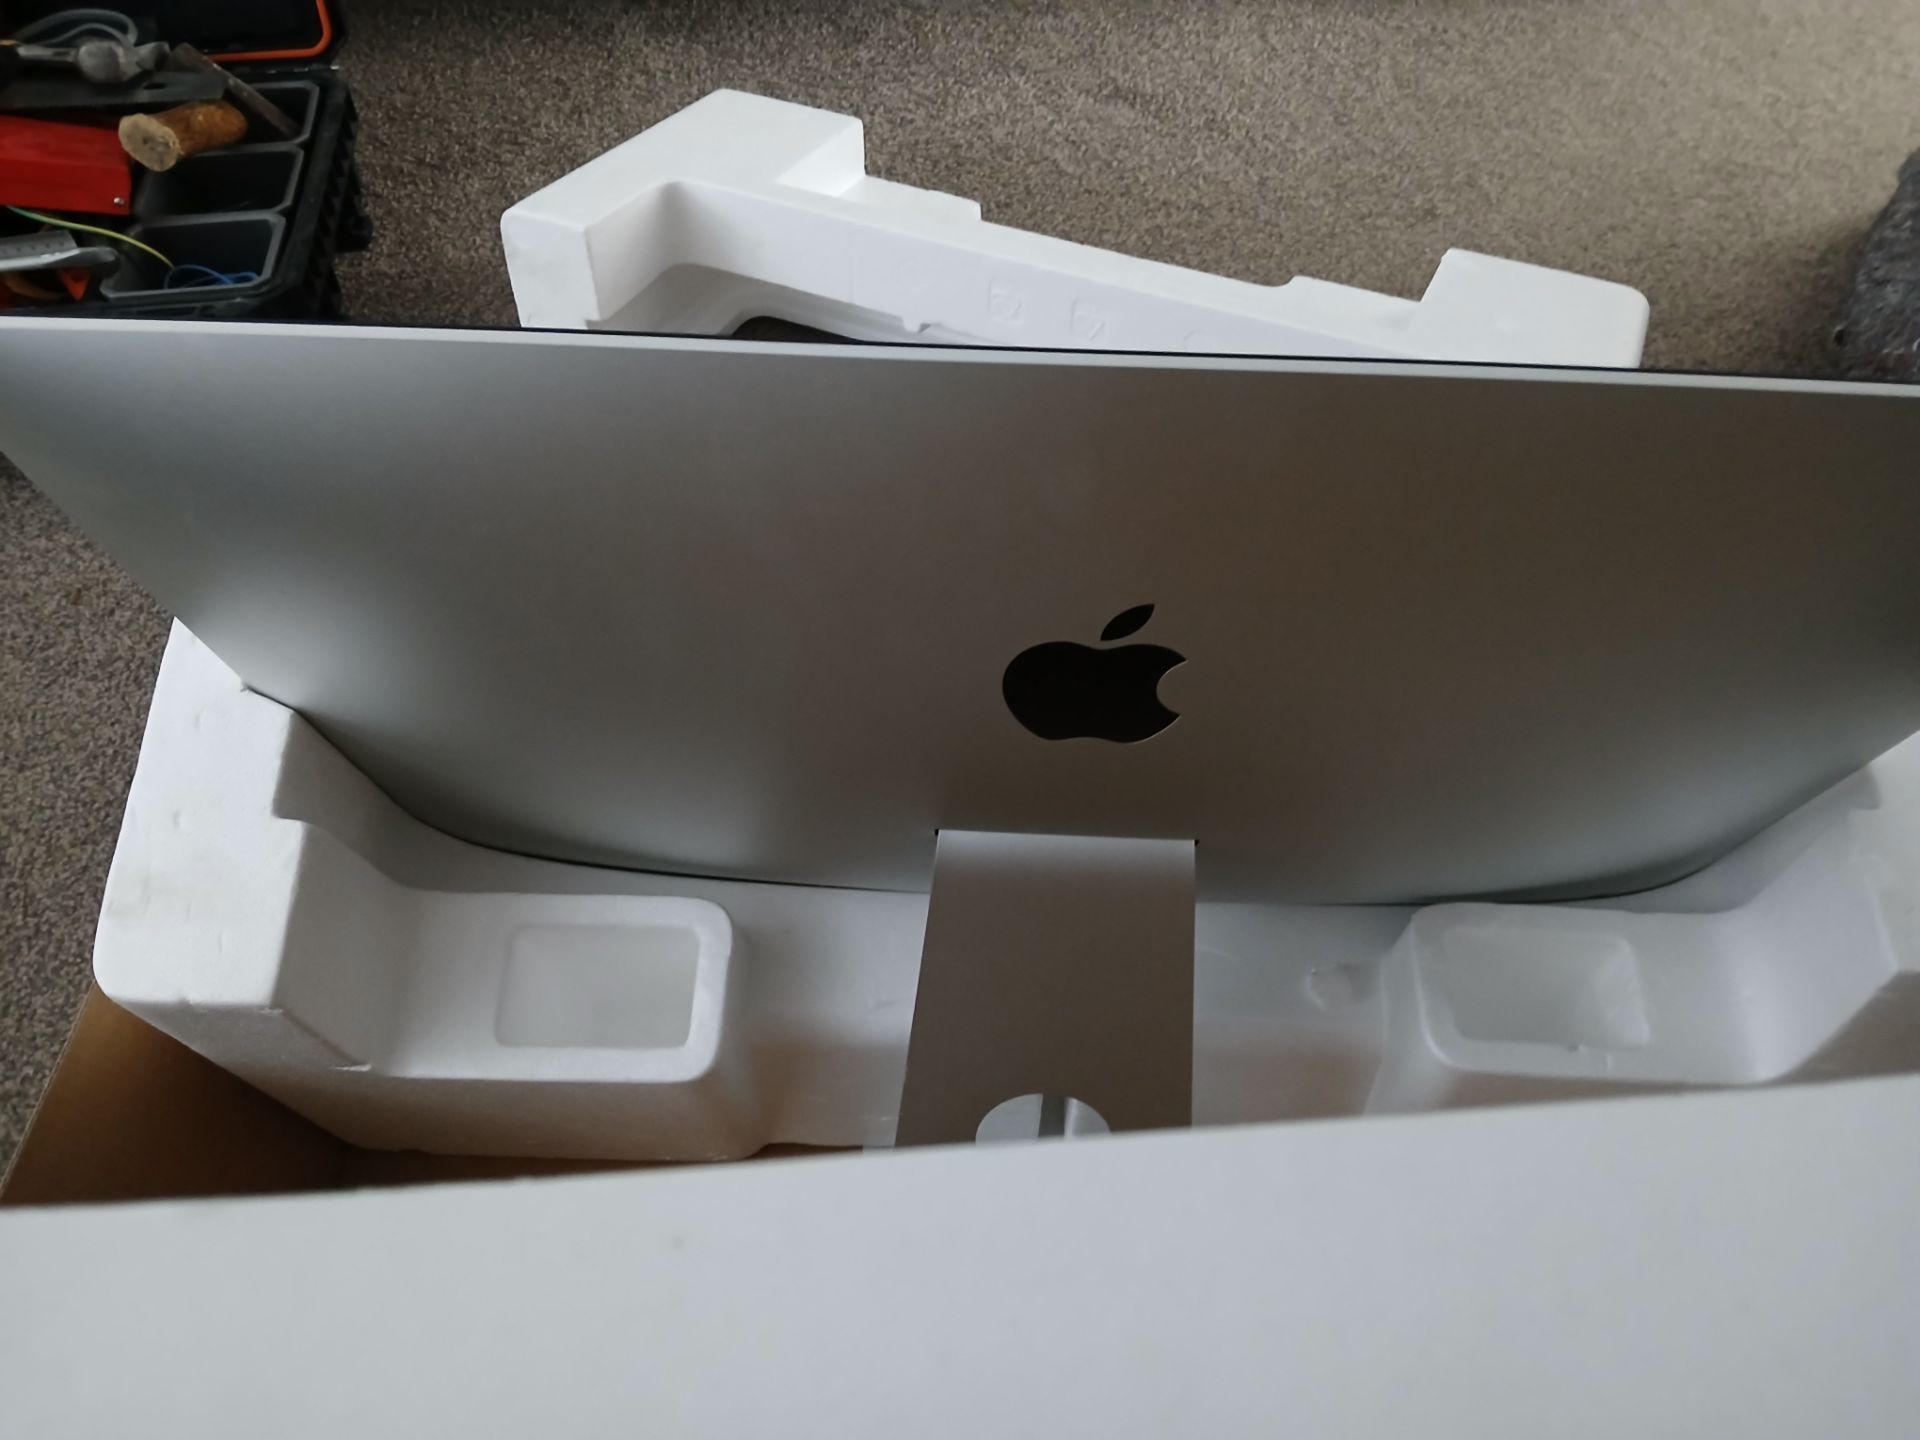 Apple iMac (Retina 5K, 27”, 2019), Serial Number DGK2HE9JV3Y (iMac only, no mouse, keyboard, or - Image 14 of 14